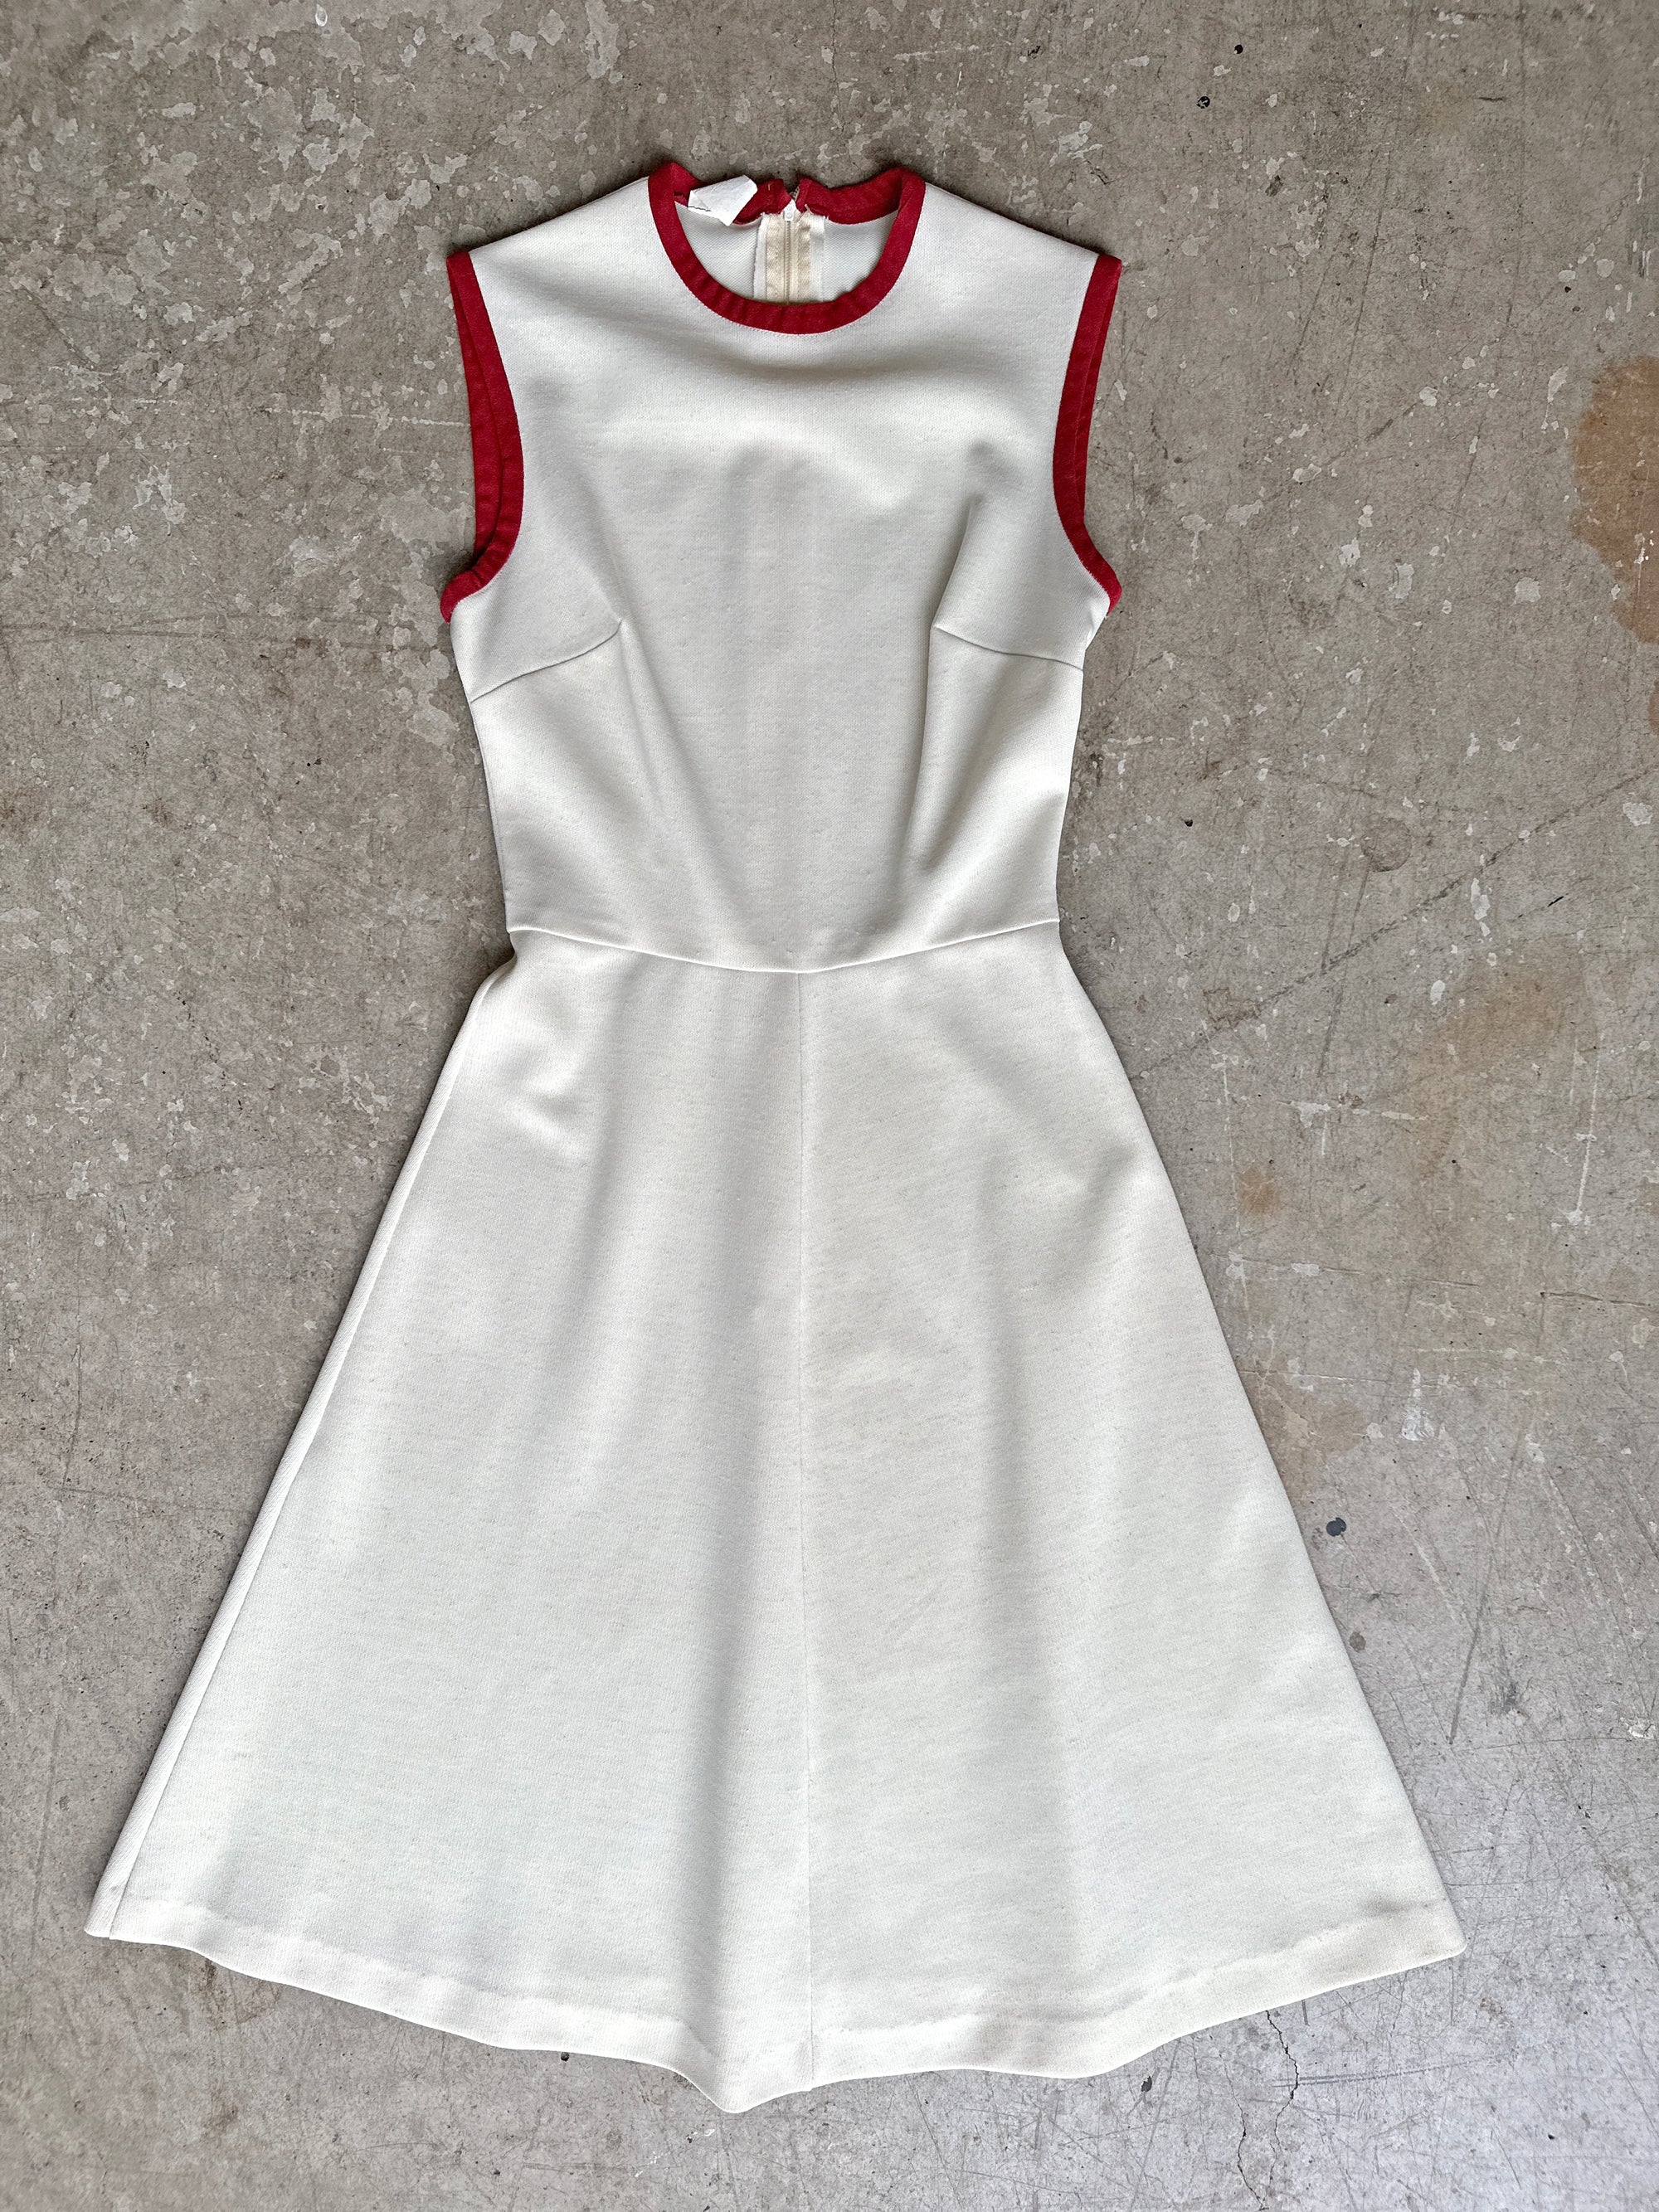 1960s Red Trim Cream Dress